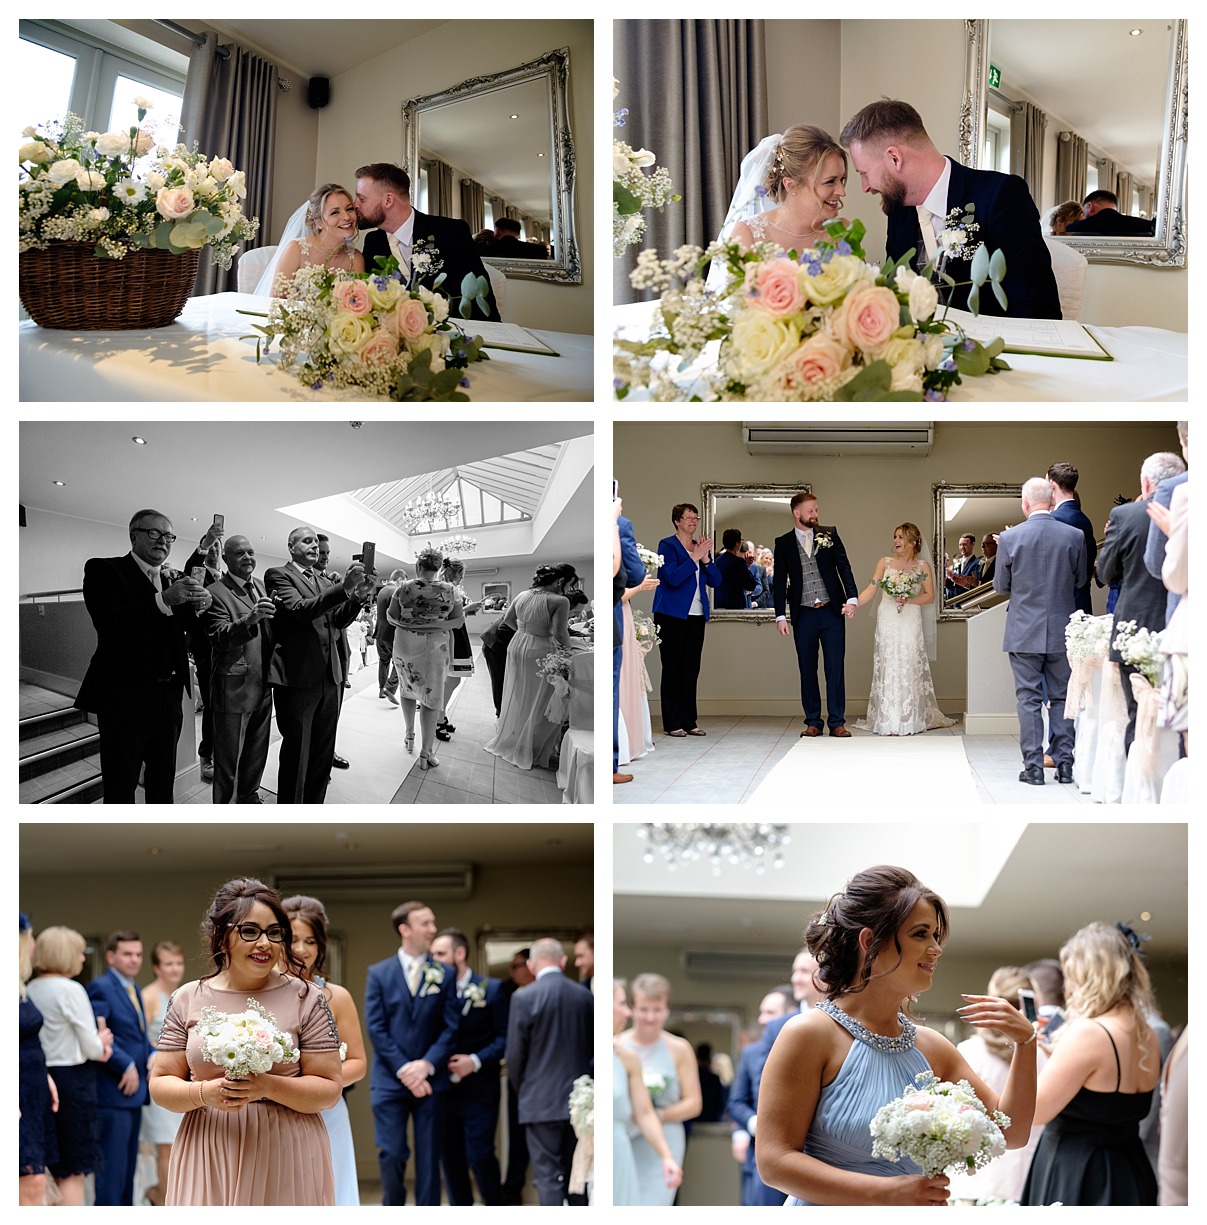 Peak Edge Hotel wedding by Derbyshire wedding photographer Chris Loneragan Sheffield 041700011